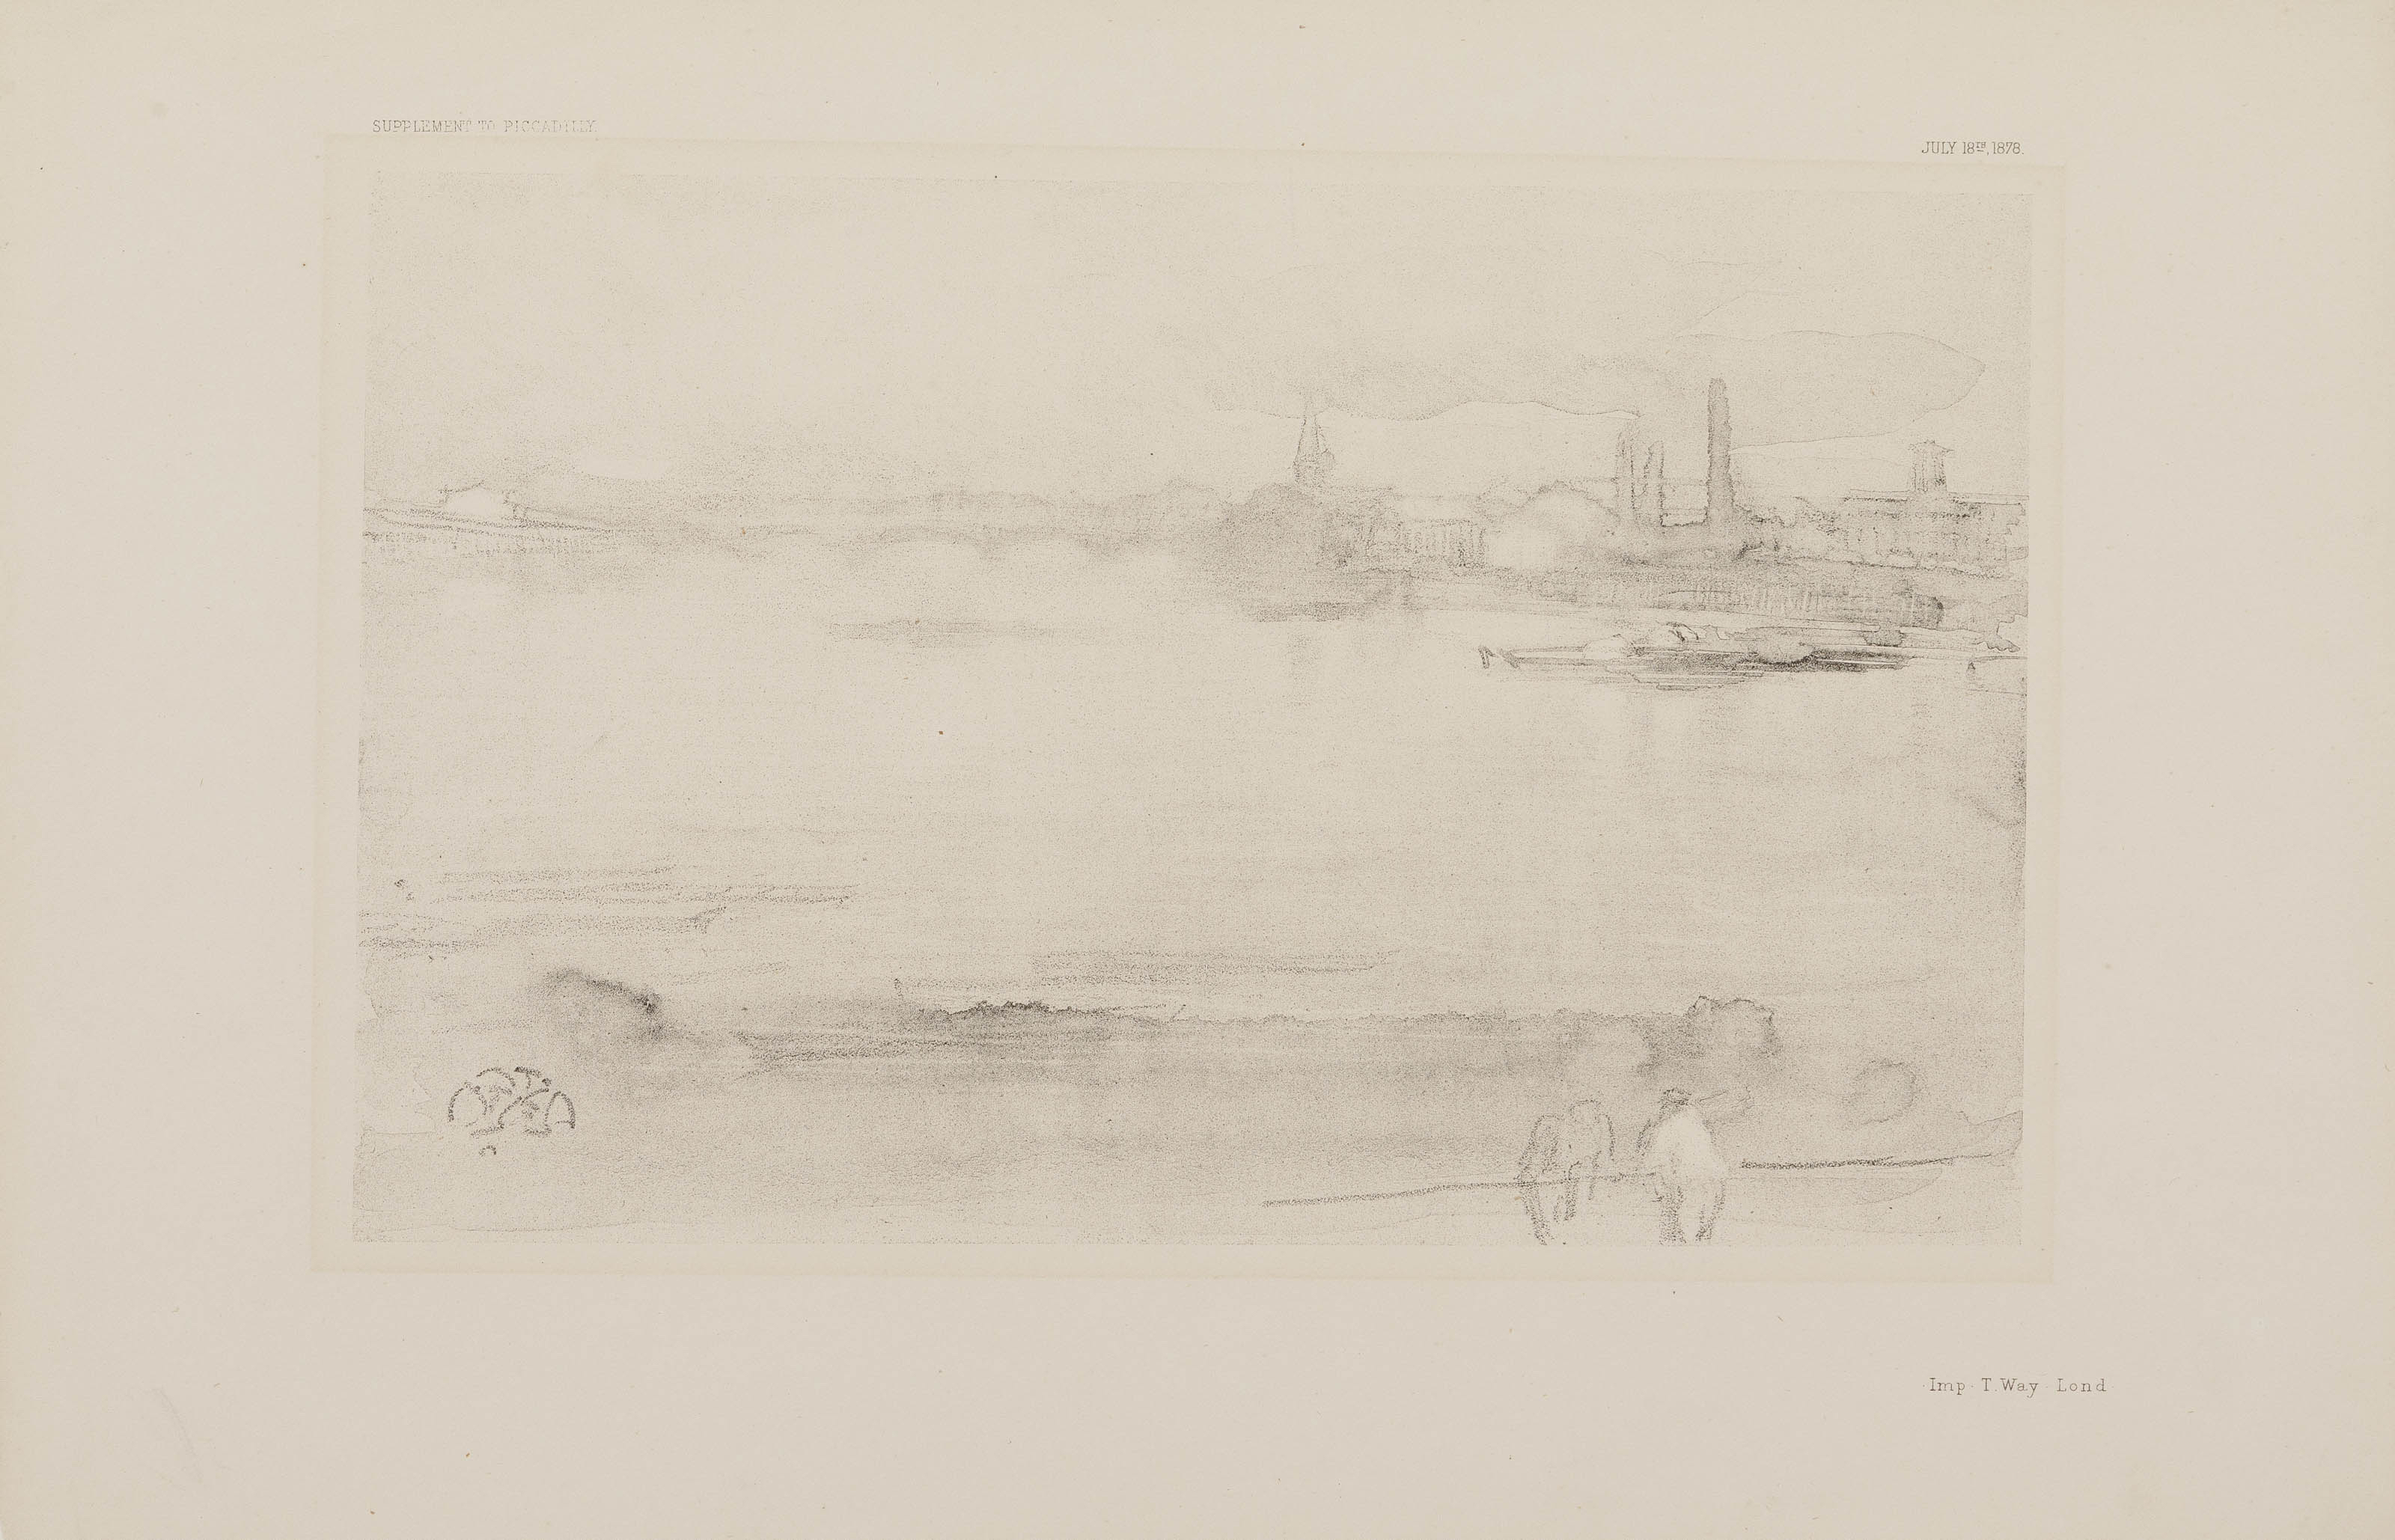 James Whistler, Early Morning, lithotint, 1878